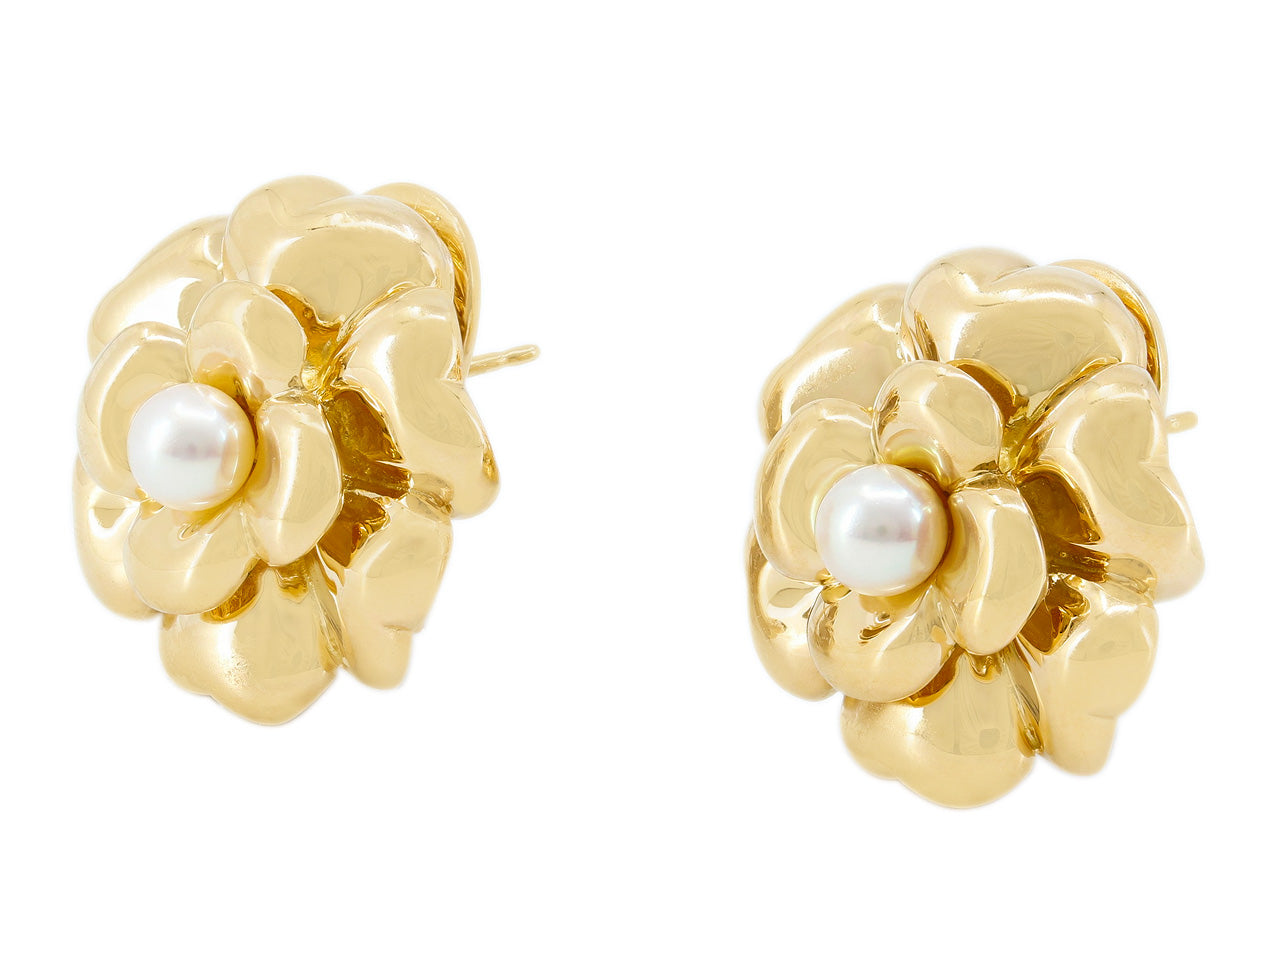 Chanel Camellia Earrings Vintage Gold